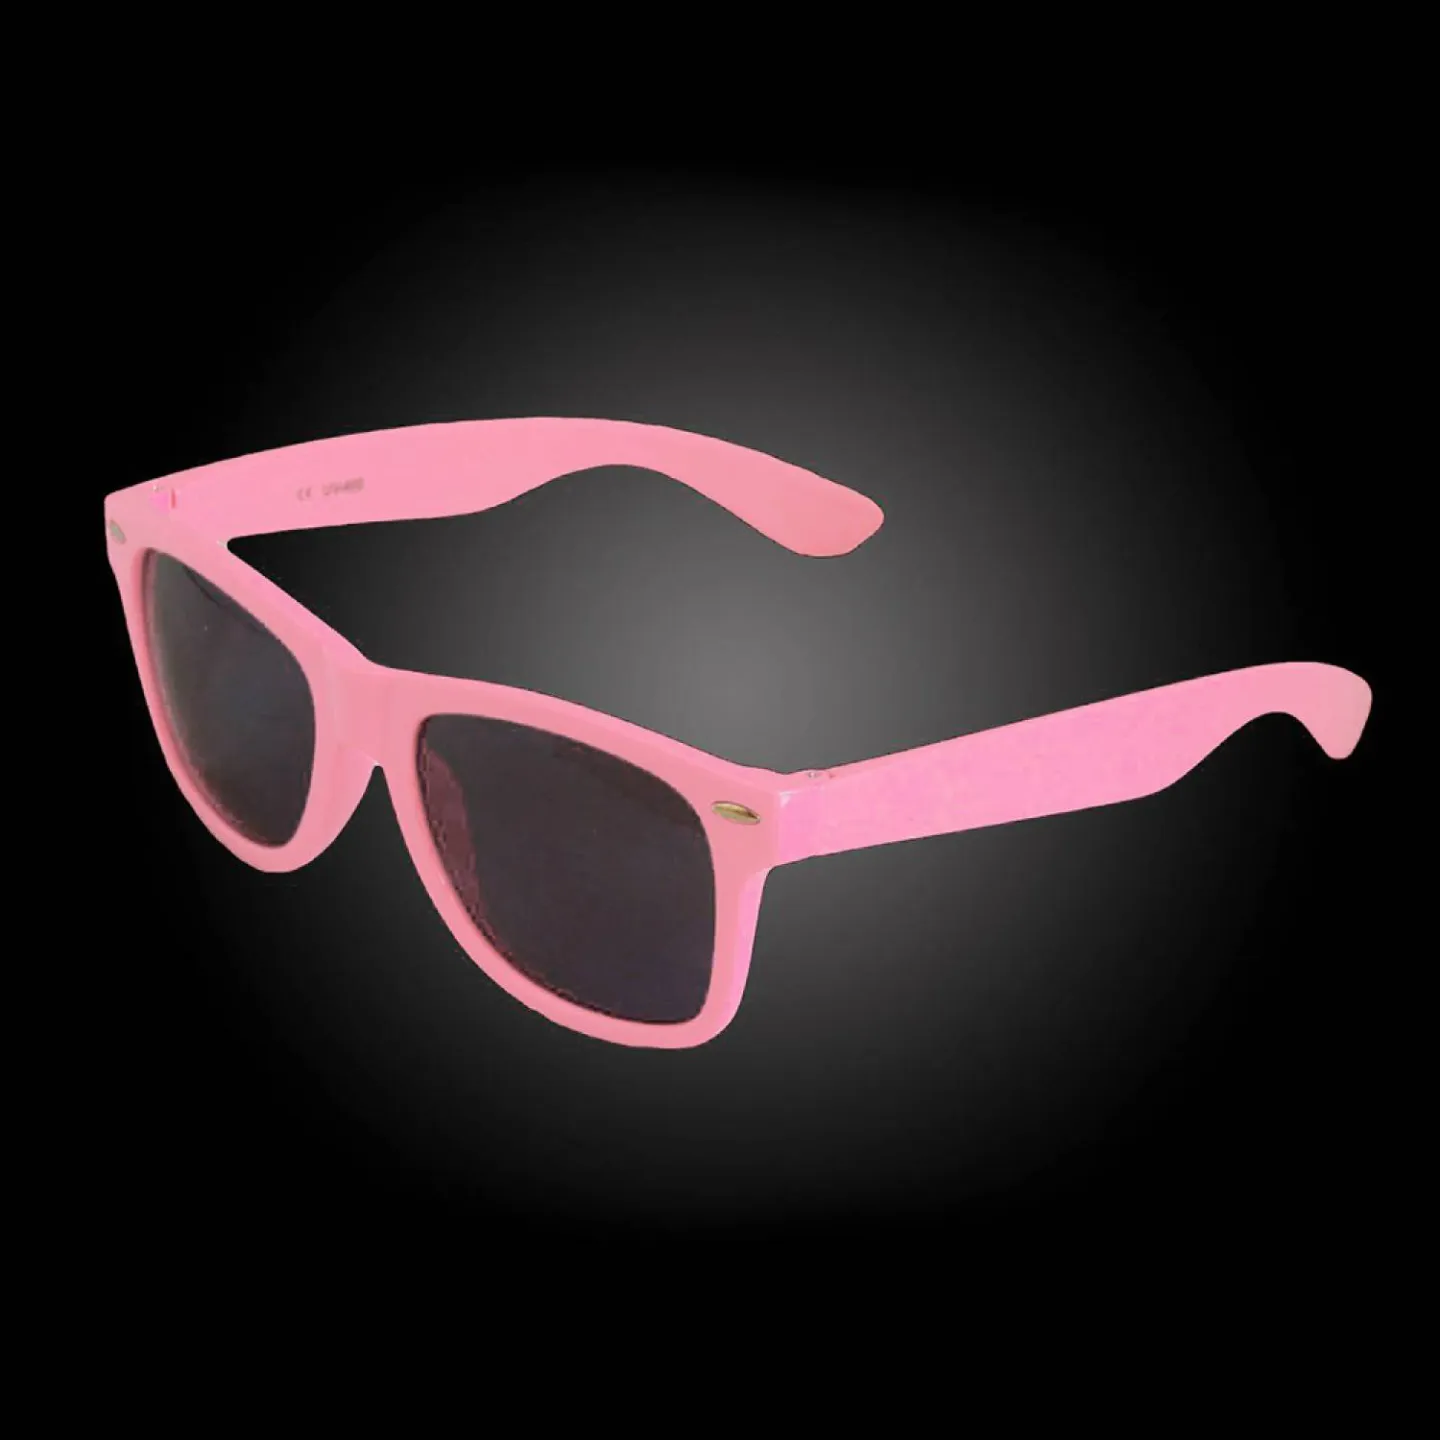 Roze festival bril kopen.